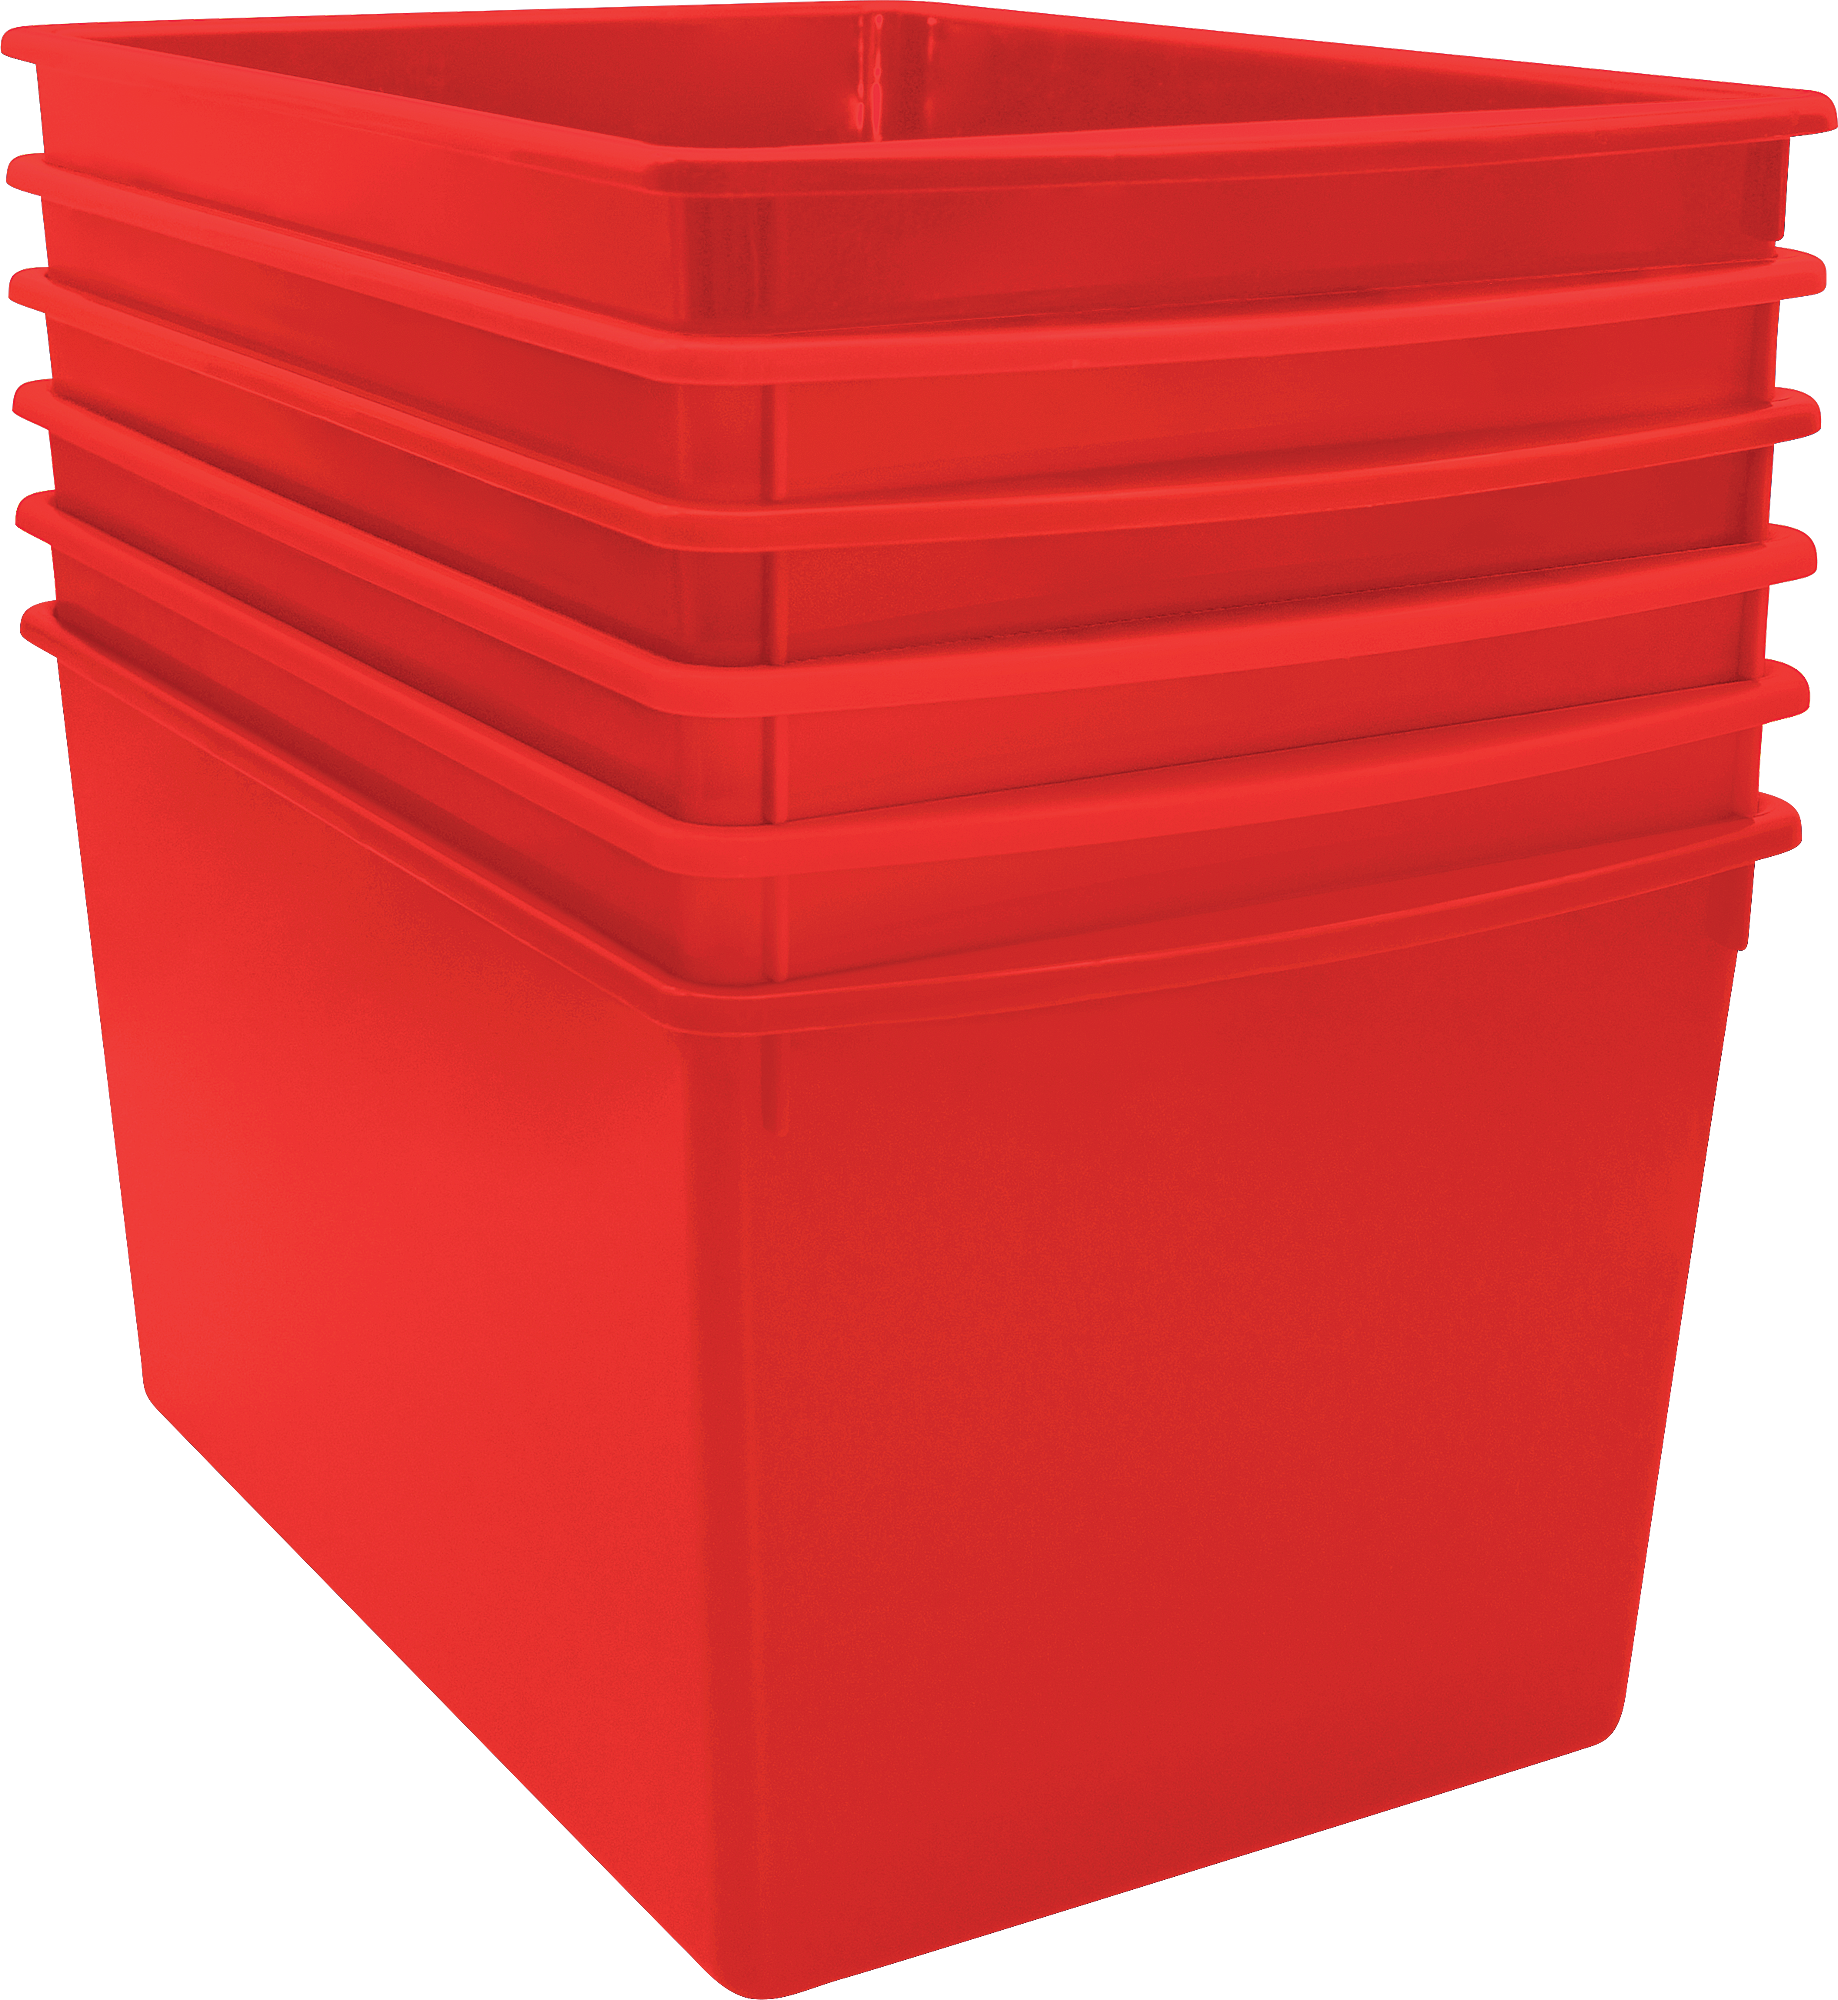 Red Plastic Multi-Purpose Bin 6 Pack